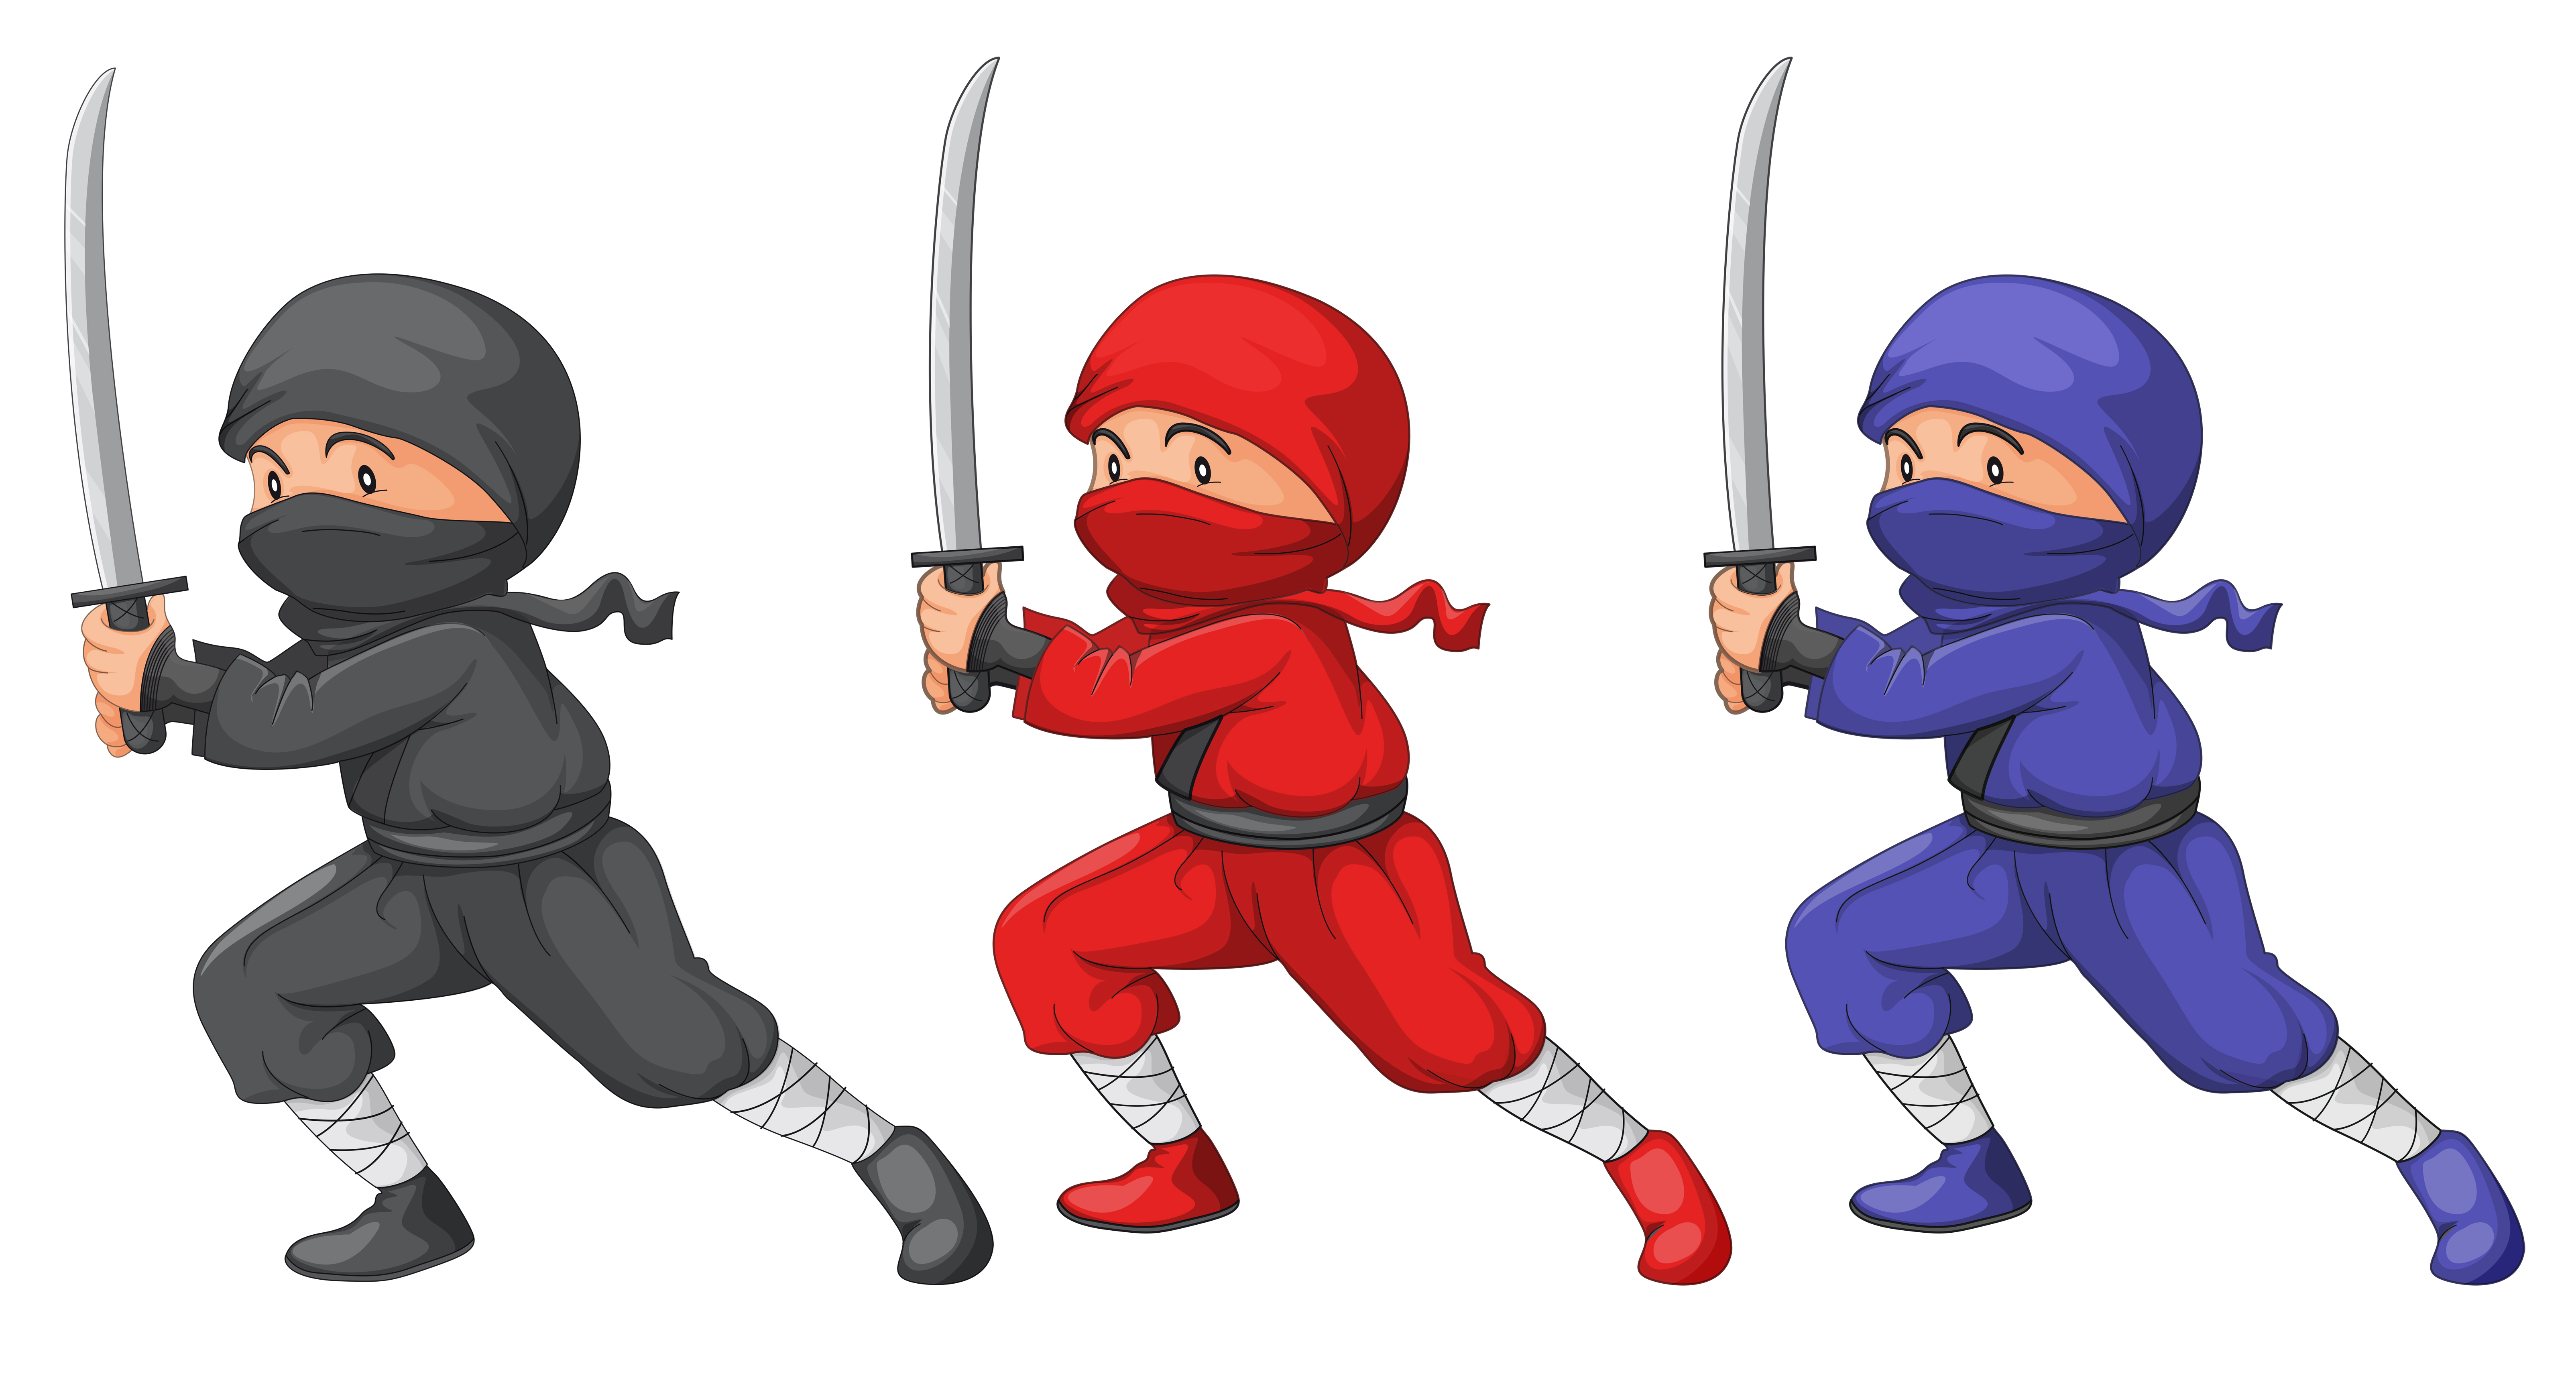 Download Three ninjas - Download Free Vectors, Clipart Graphics & Vector Art